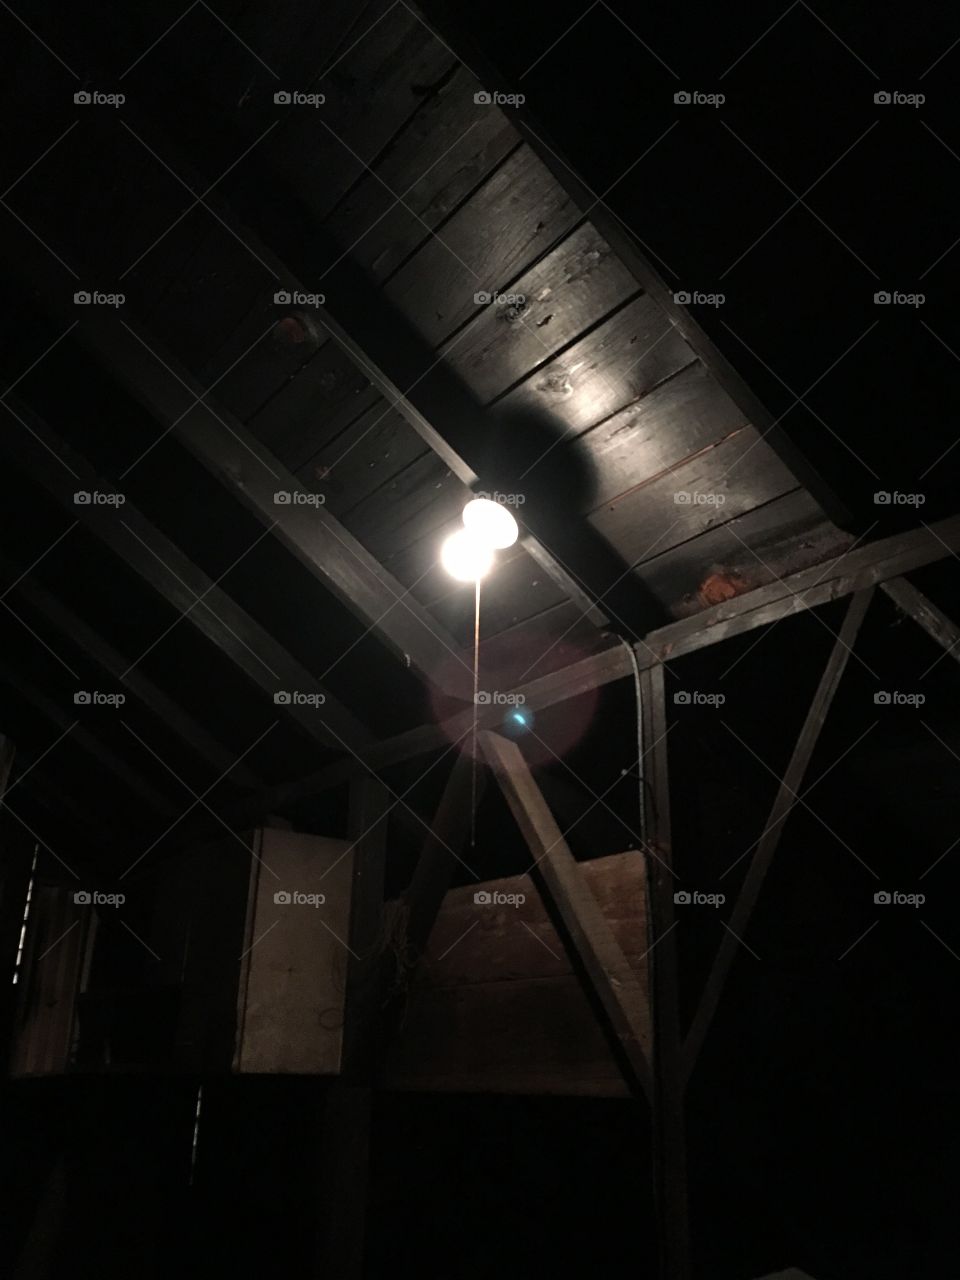 Single bulb in an old barn